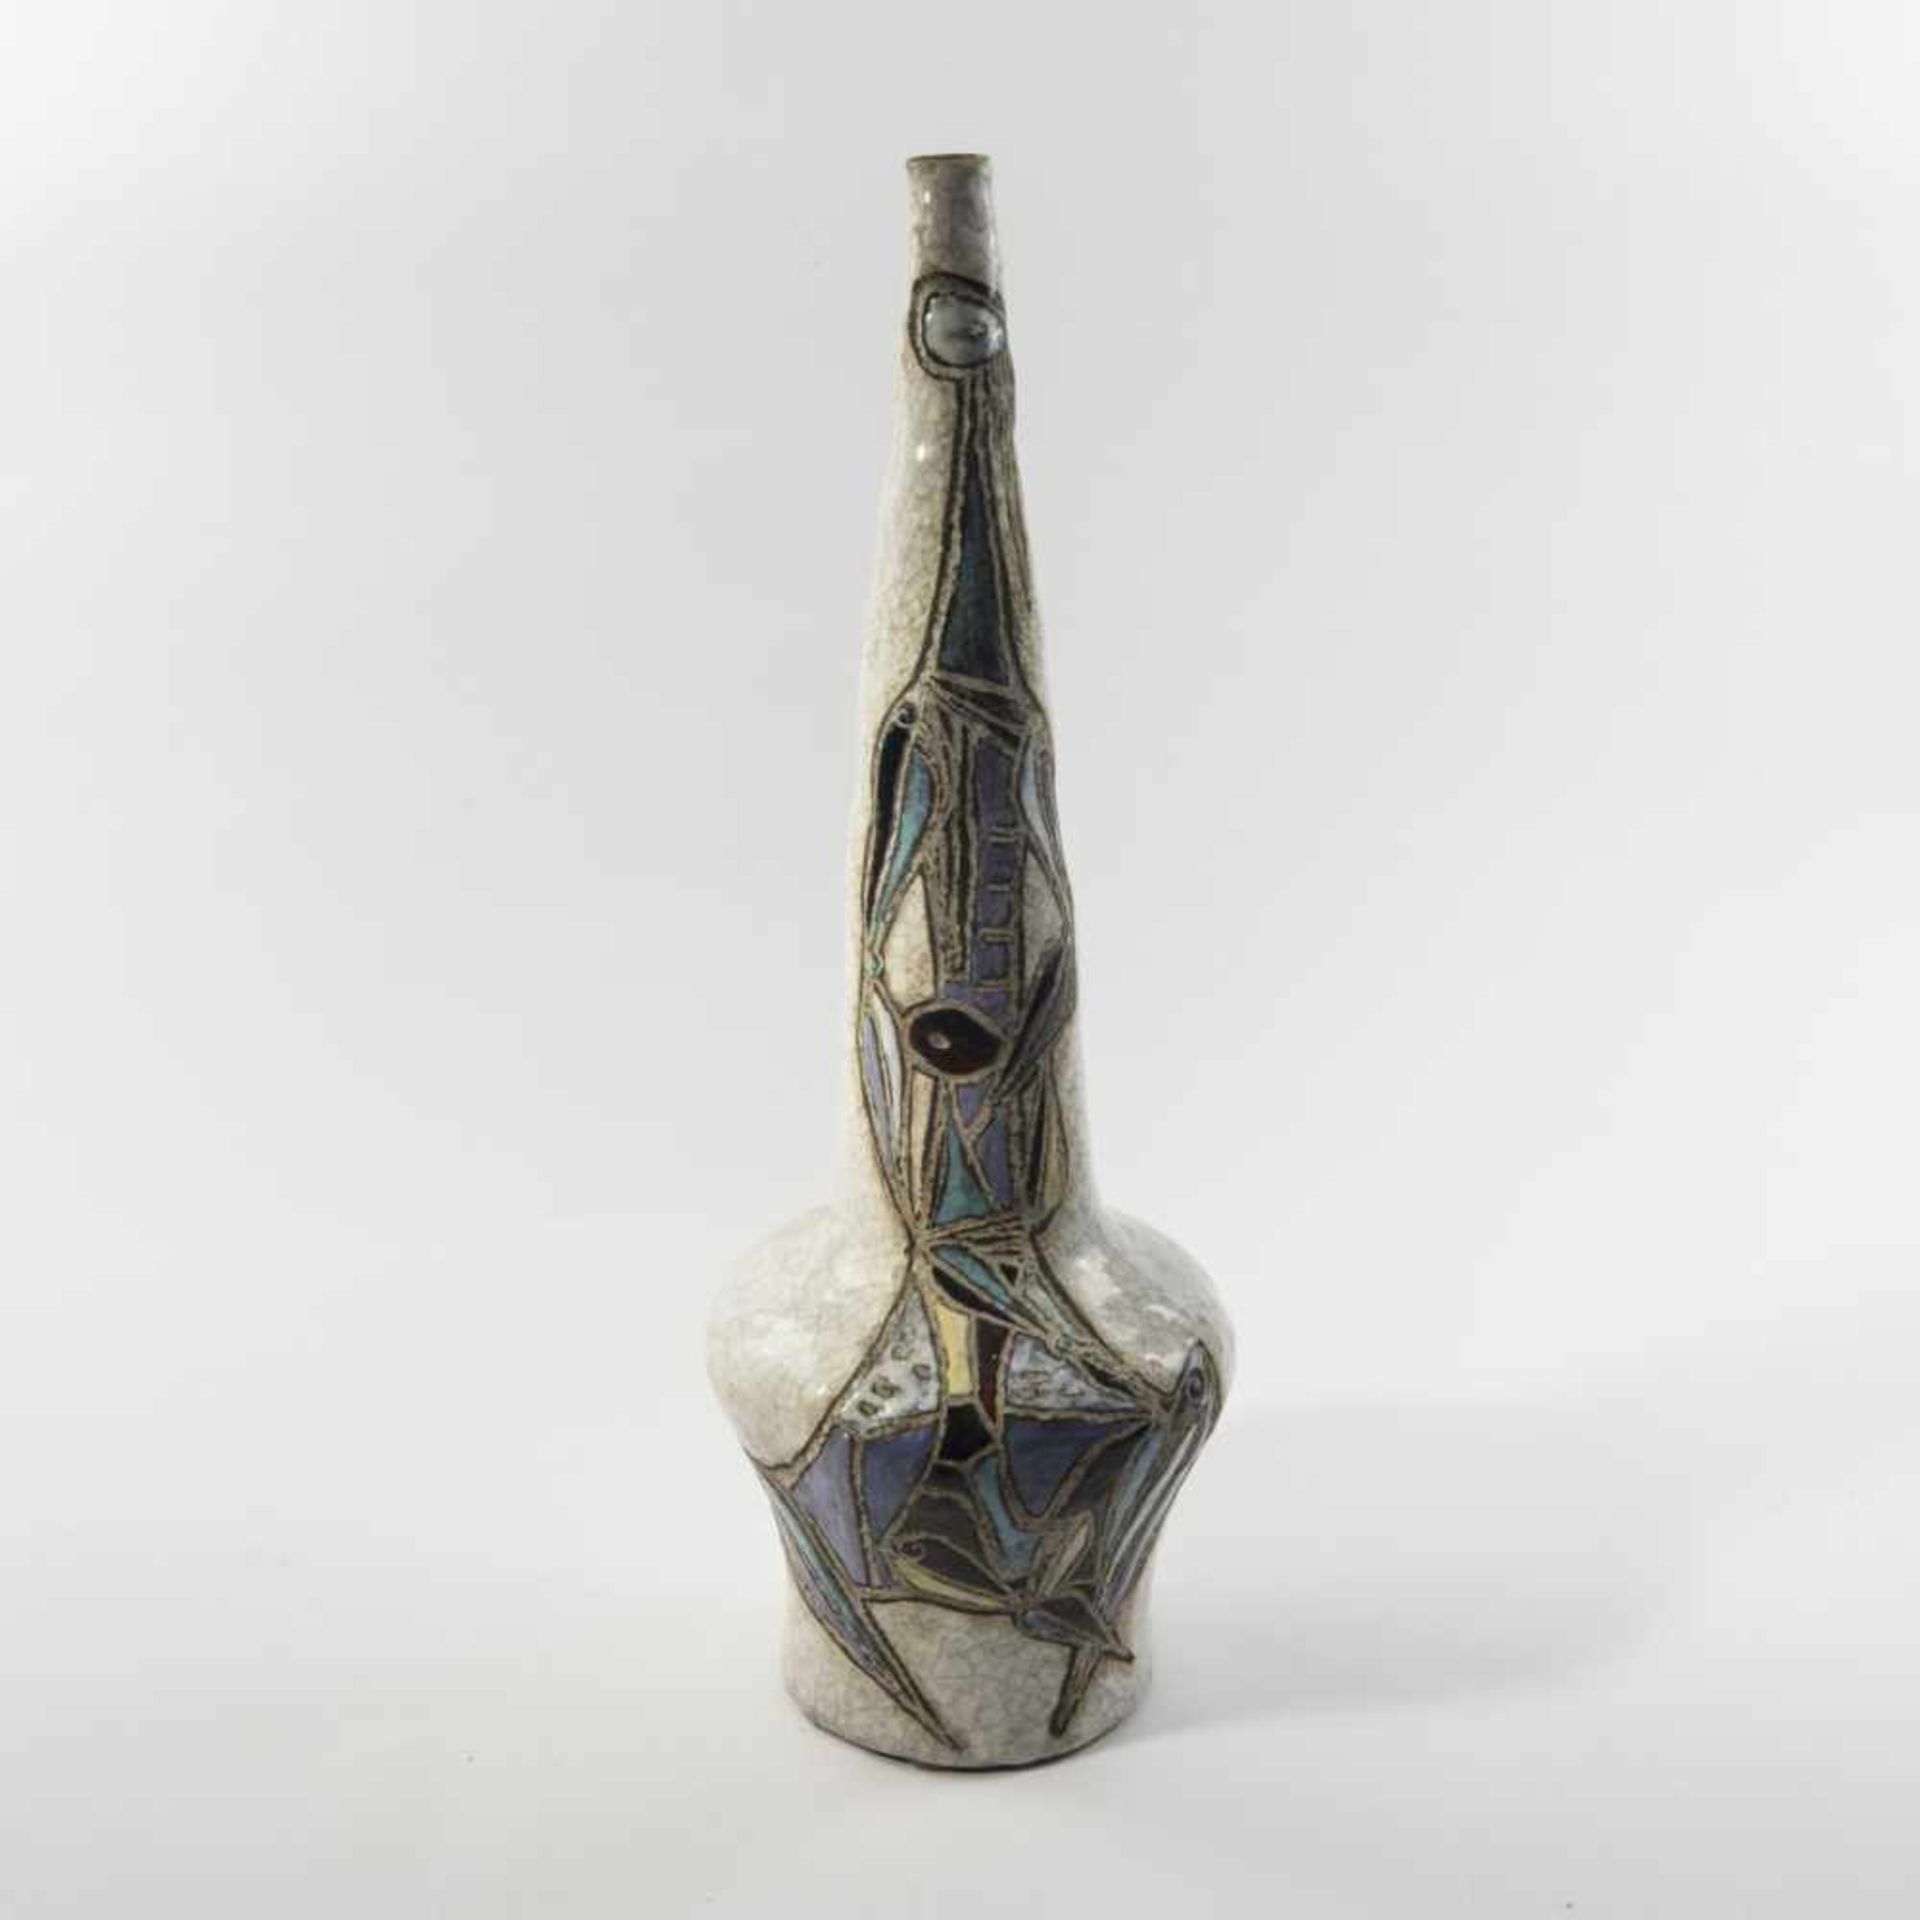 Marcello Fantoni, Tall vase, 1950sTall vase, 1950sH. 51.5 cm. Majolica, polychromatic enamel on